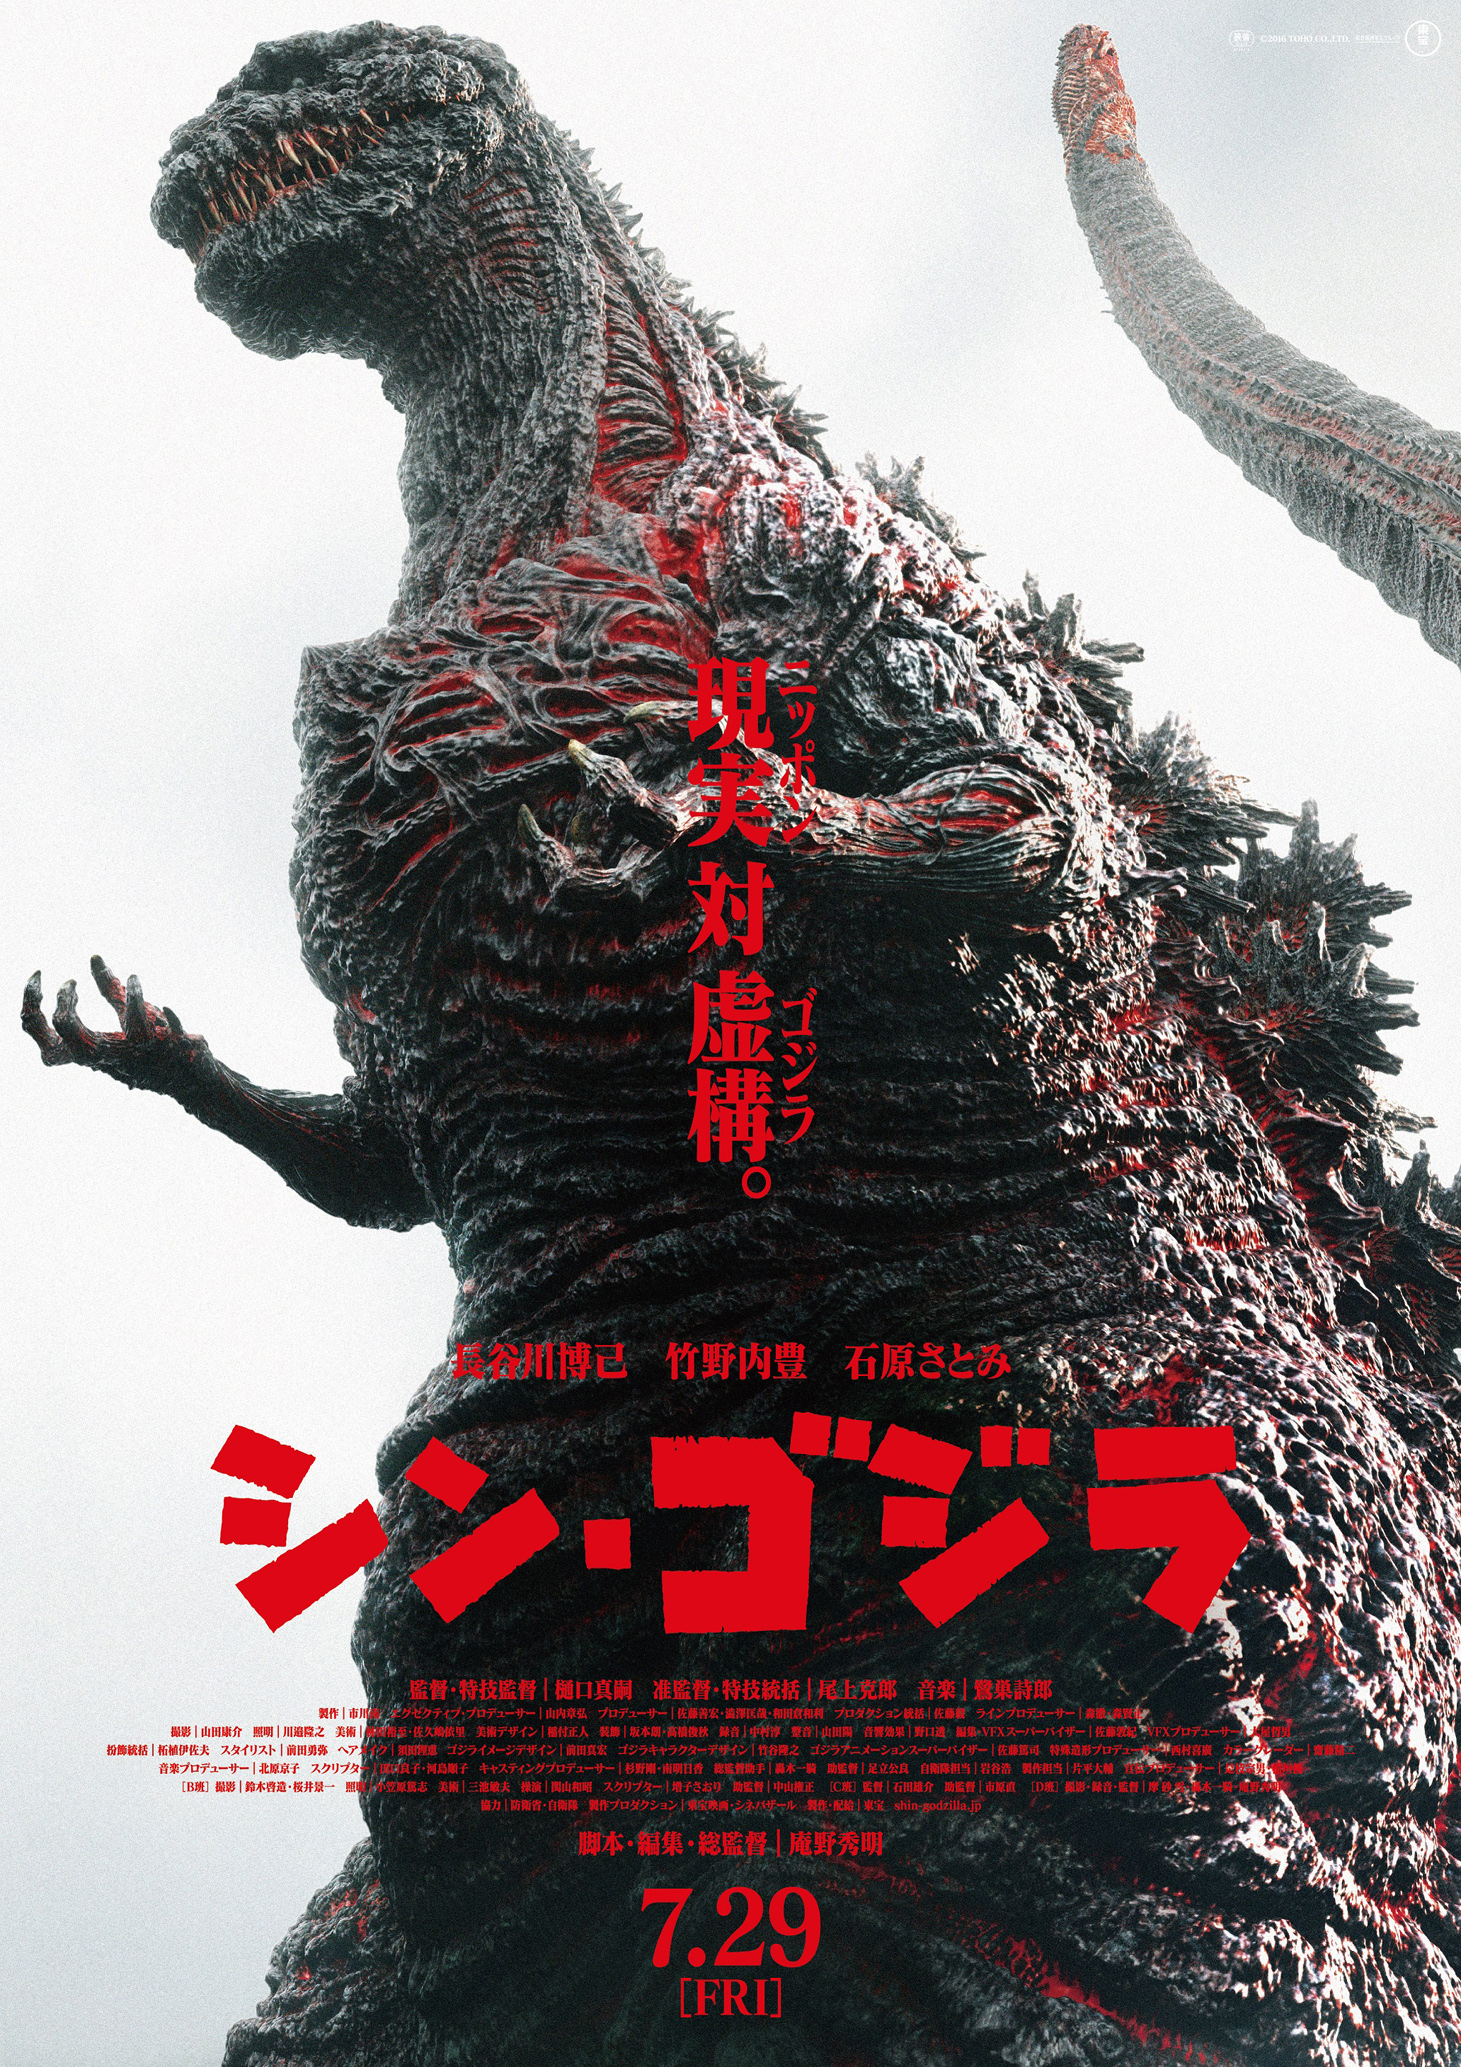 Godzilla Earth vs King Ghidorah - Shin Godzilla, Godzilla Earth vs King  Ghidorah - Shin Godzilla, By Godzilla All Monsters, King Godzilla